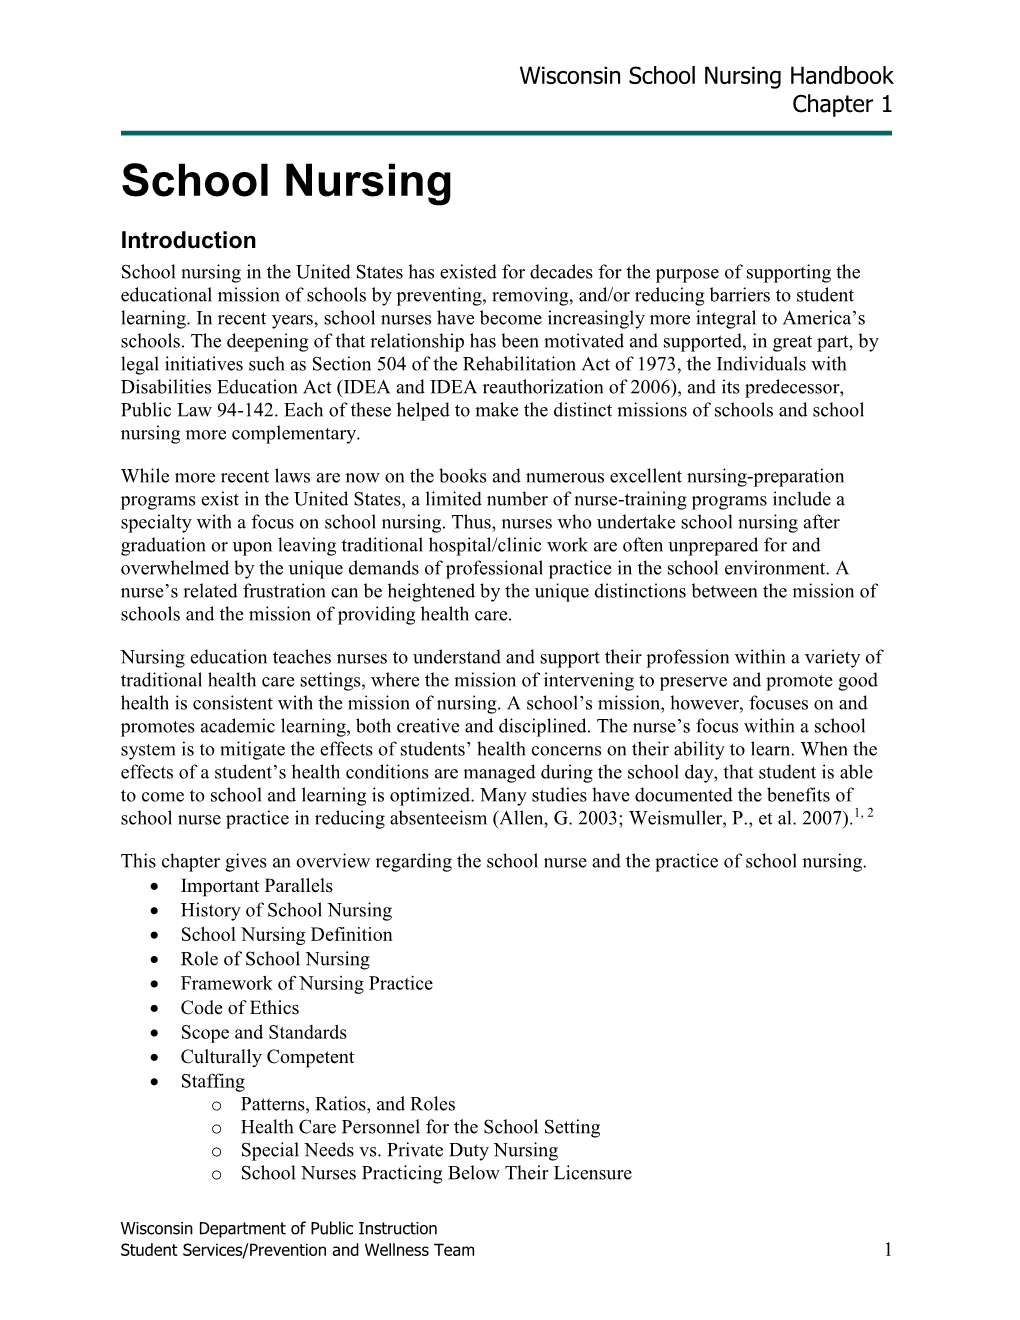 Code of Ethics for School Nursing the National Association of School Nurses Has Established a Code of Ethics for the Practice of School Nursing